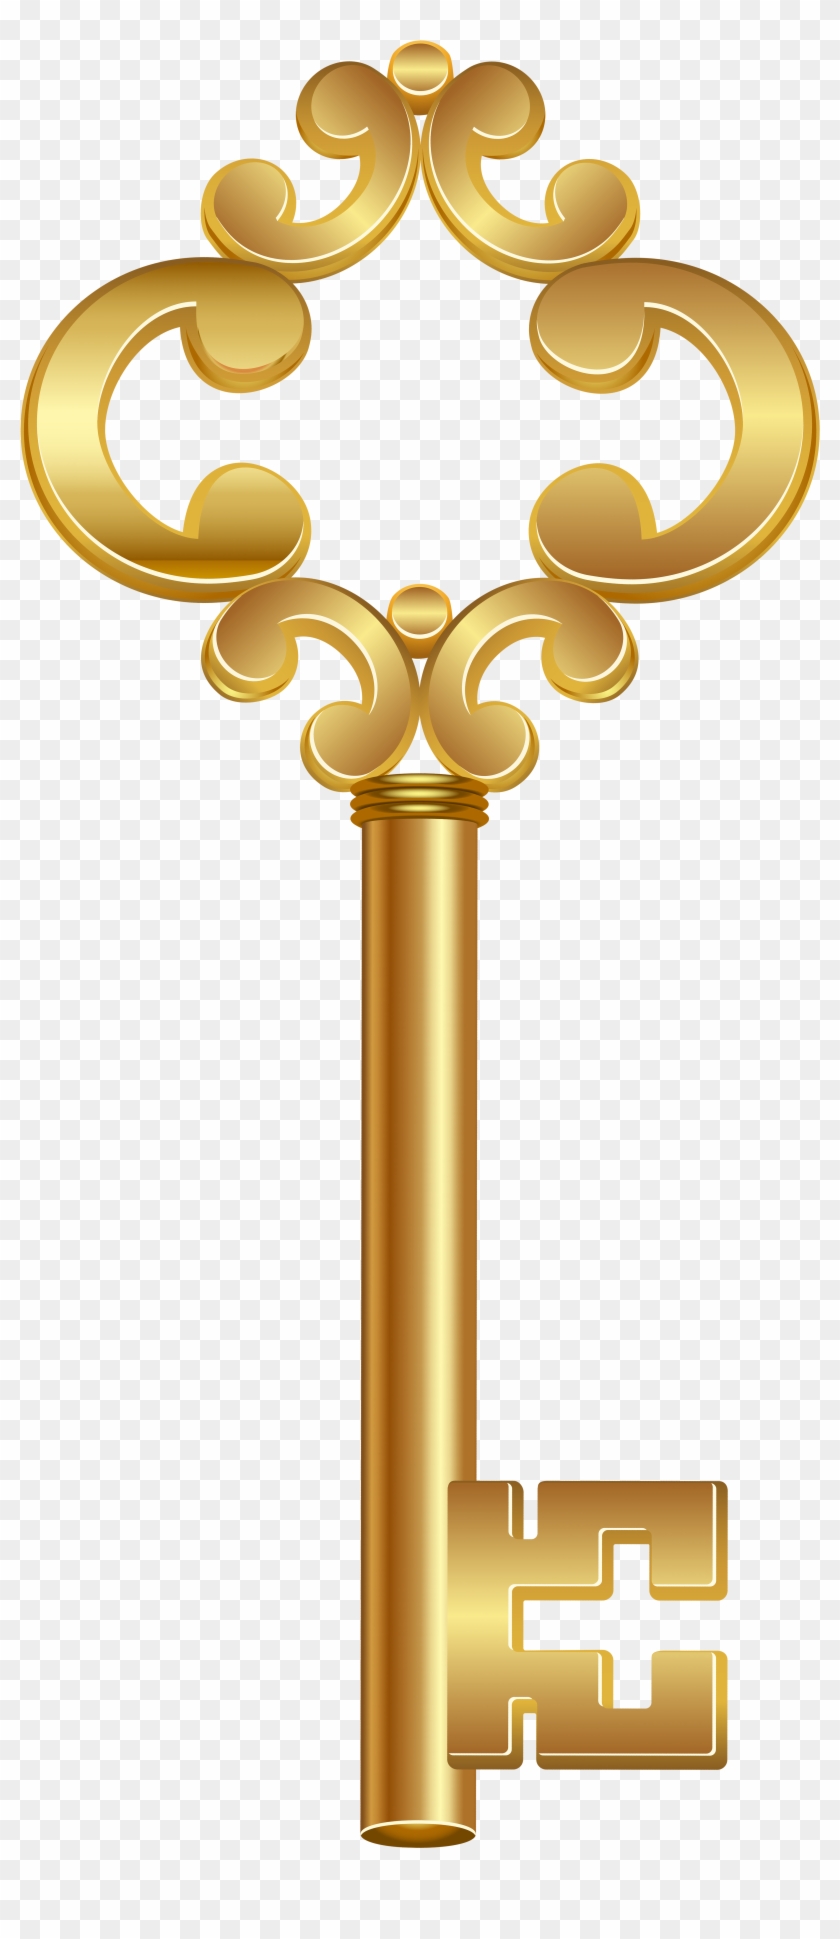 Gold Key Png Clip Art Image - Gold Key Png #361516